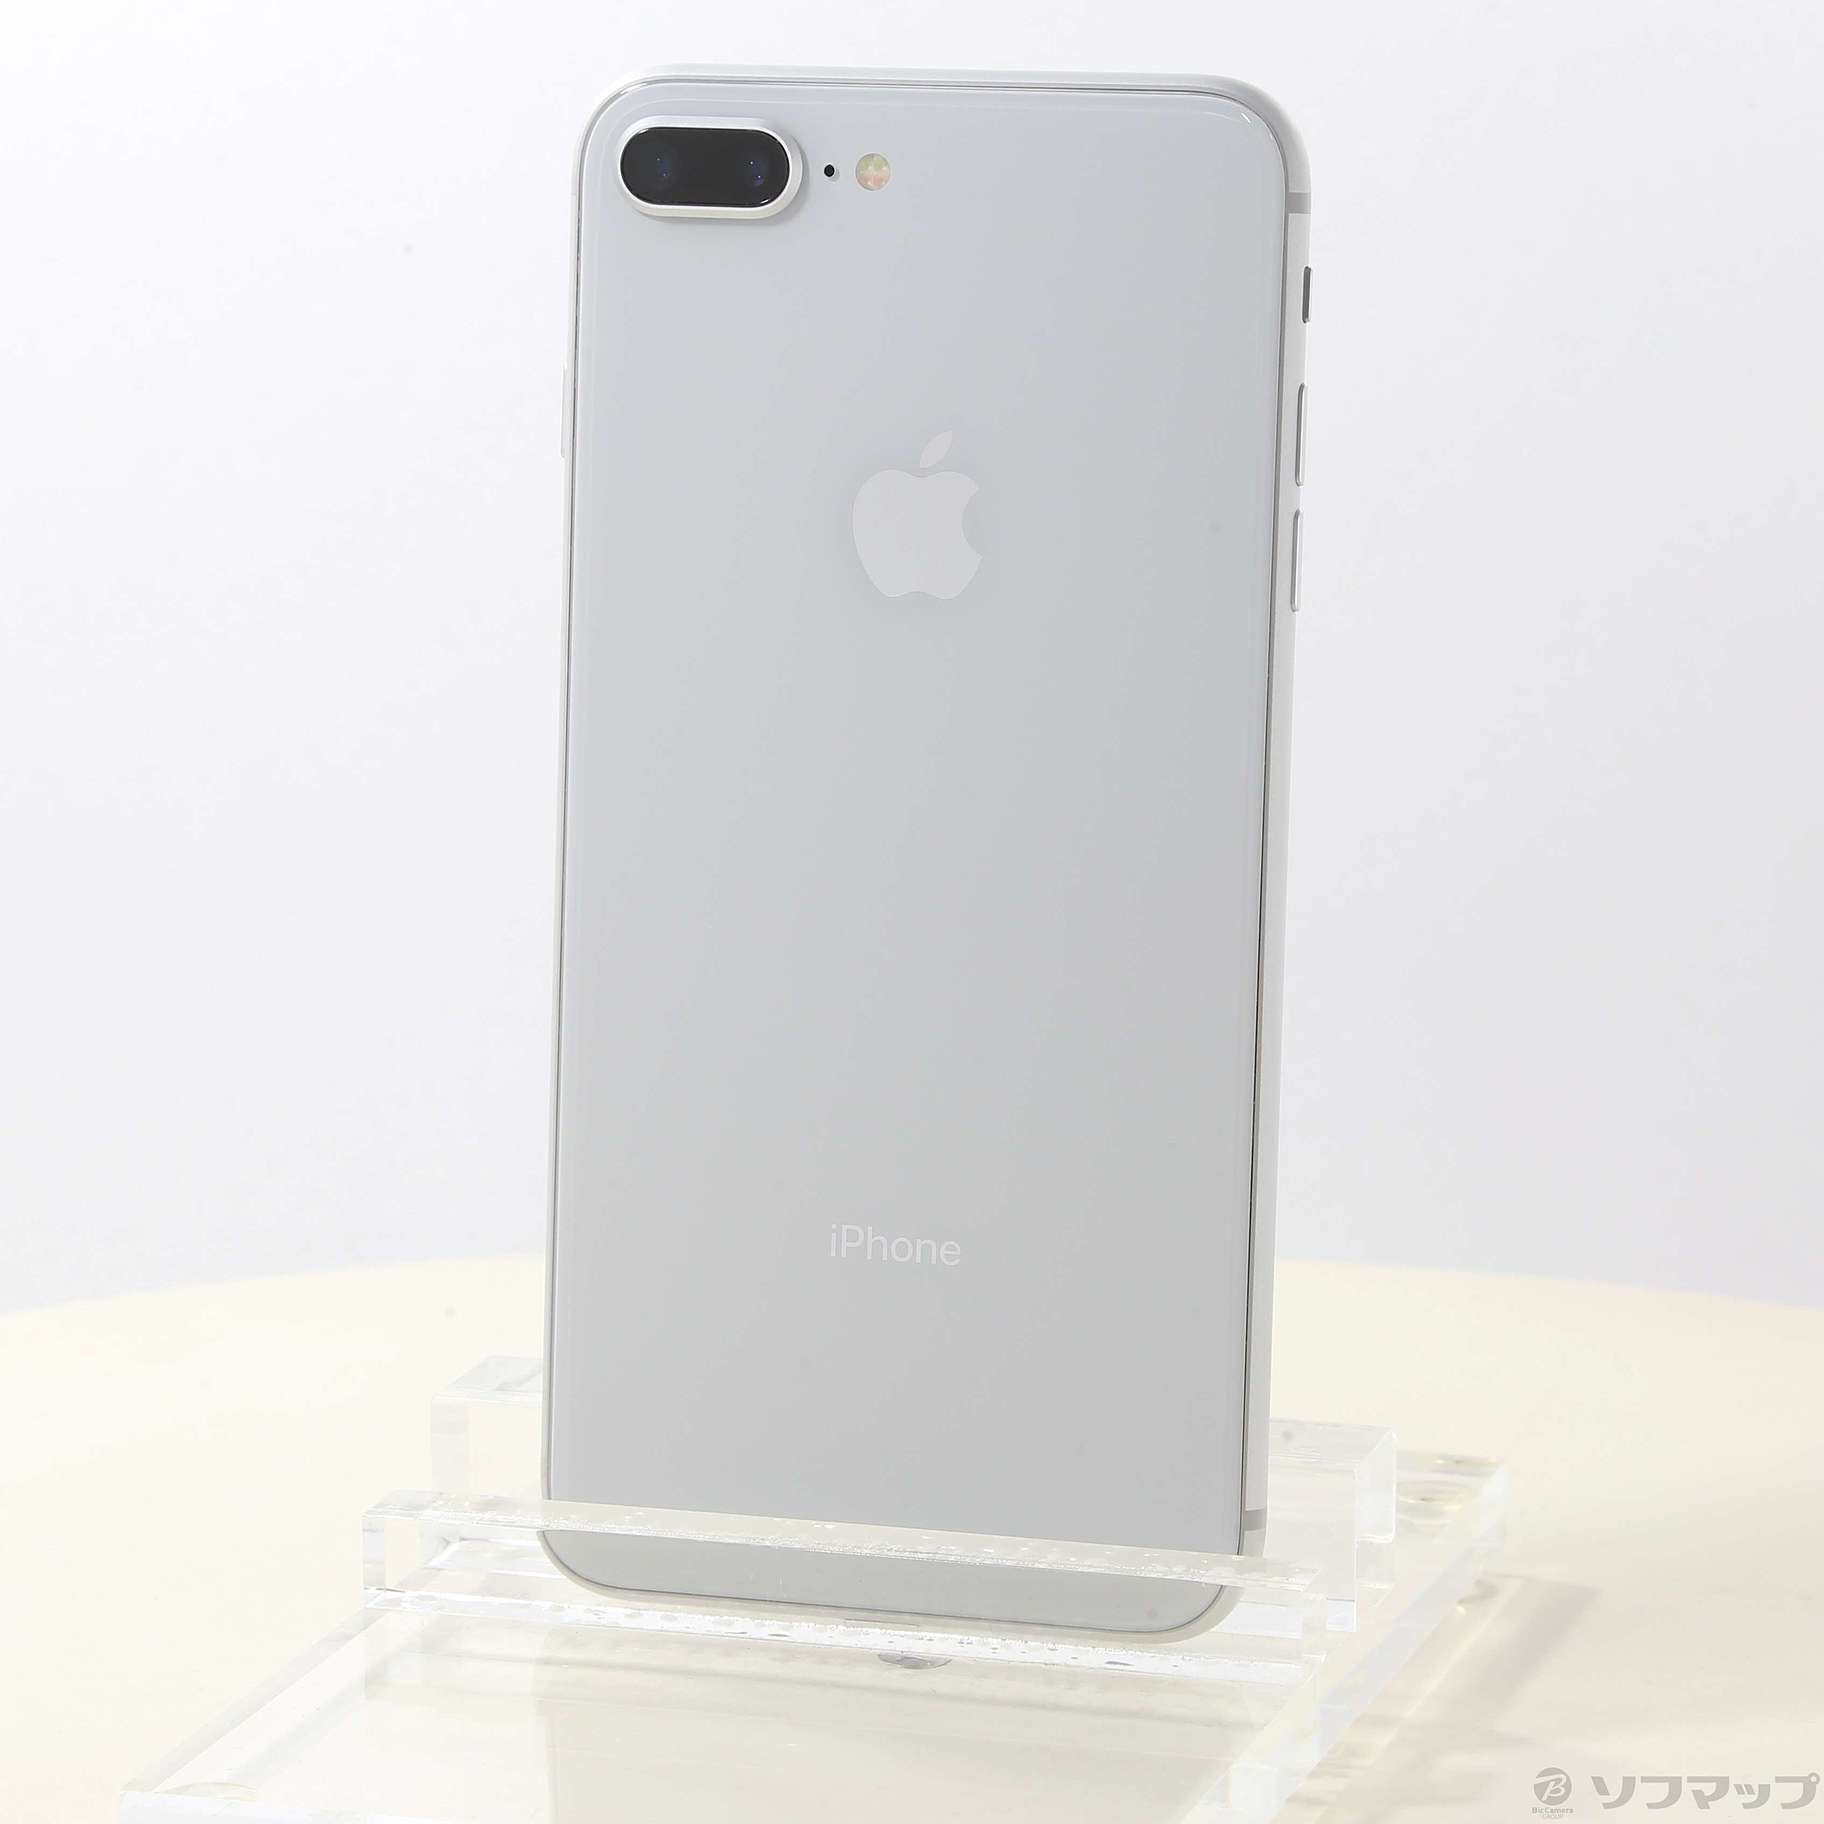 7,480円iPhone 8 Plus Silver 64 GB au